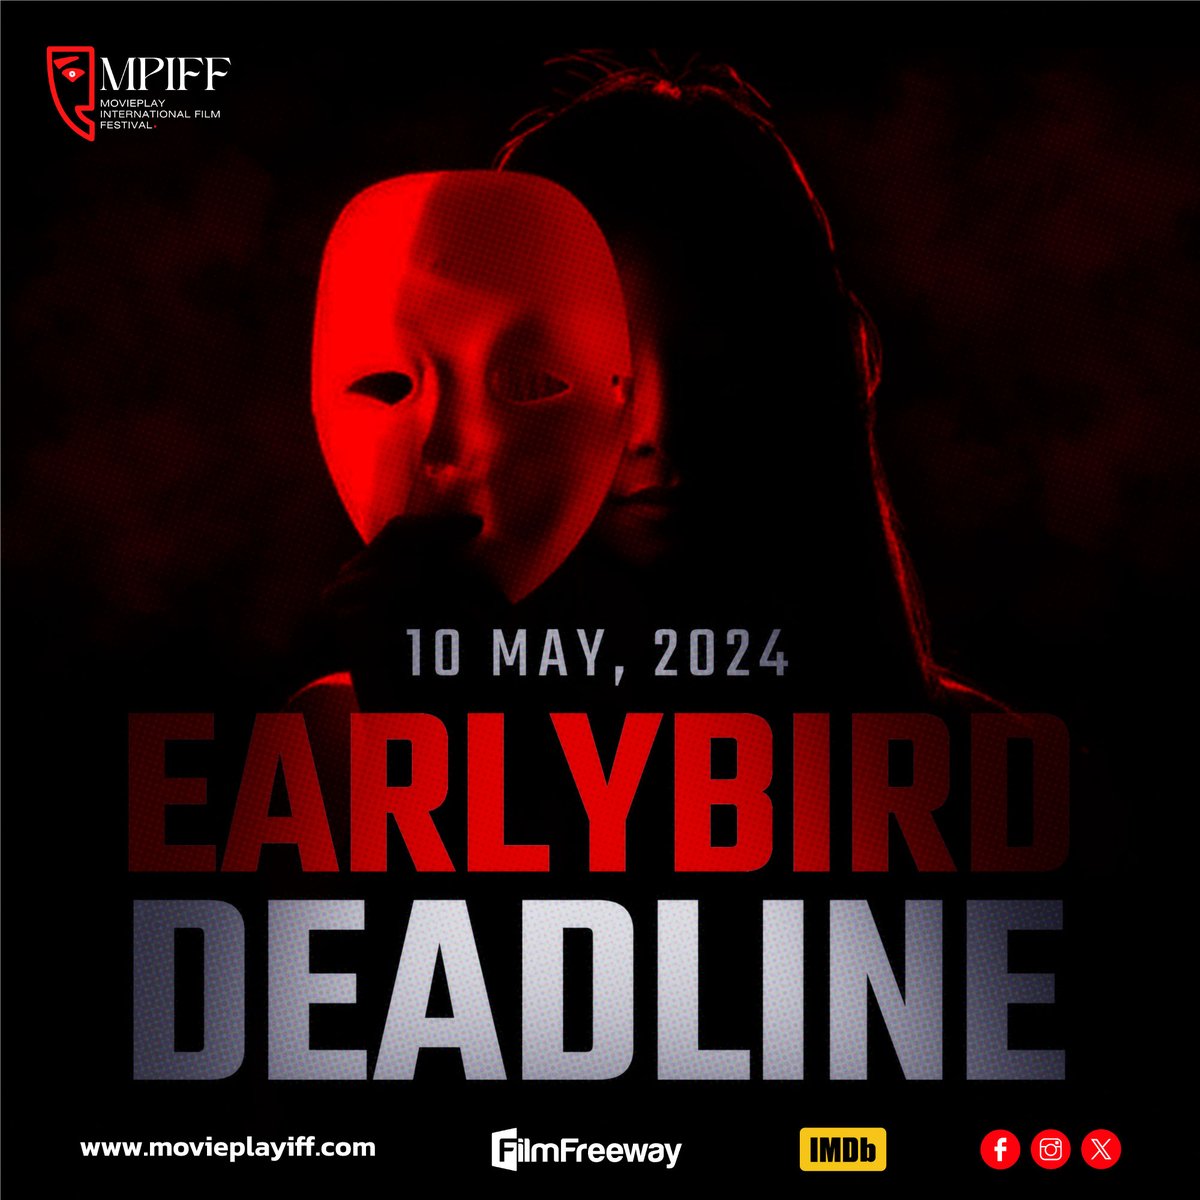 Earlybird Deadline Today!! Earlybird Deadline - May 10, 2024 Entries through FilmFreeway: filmfreeway.com/MoviePlayInter…